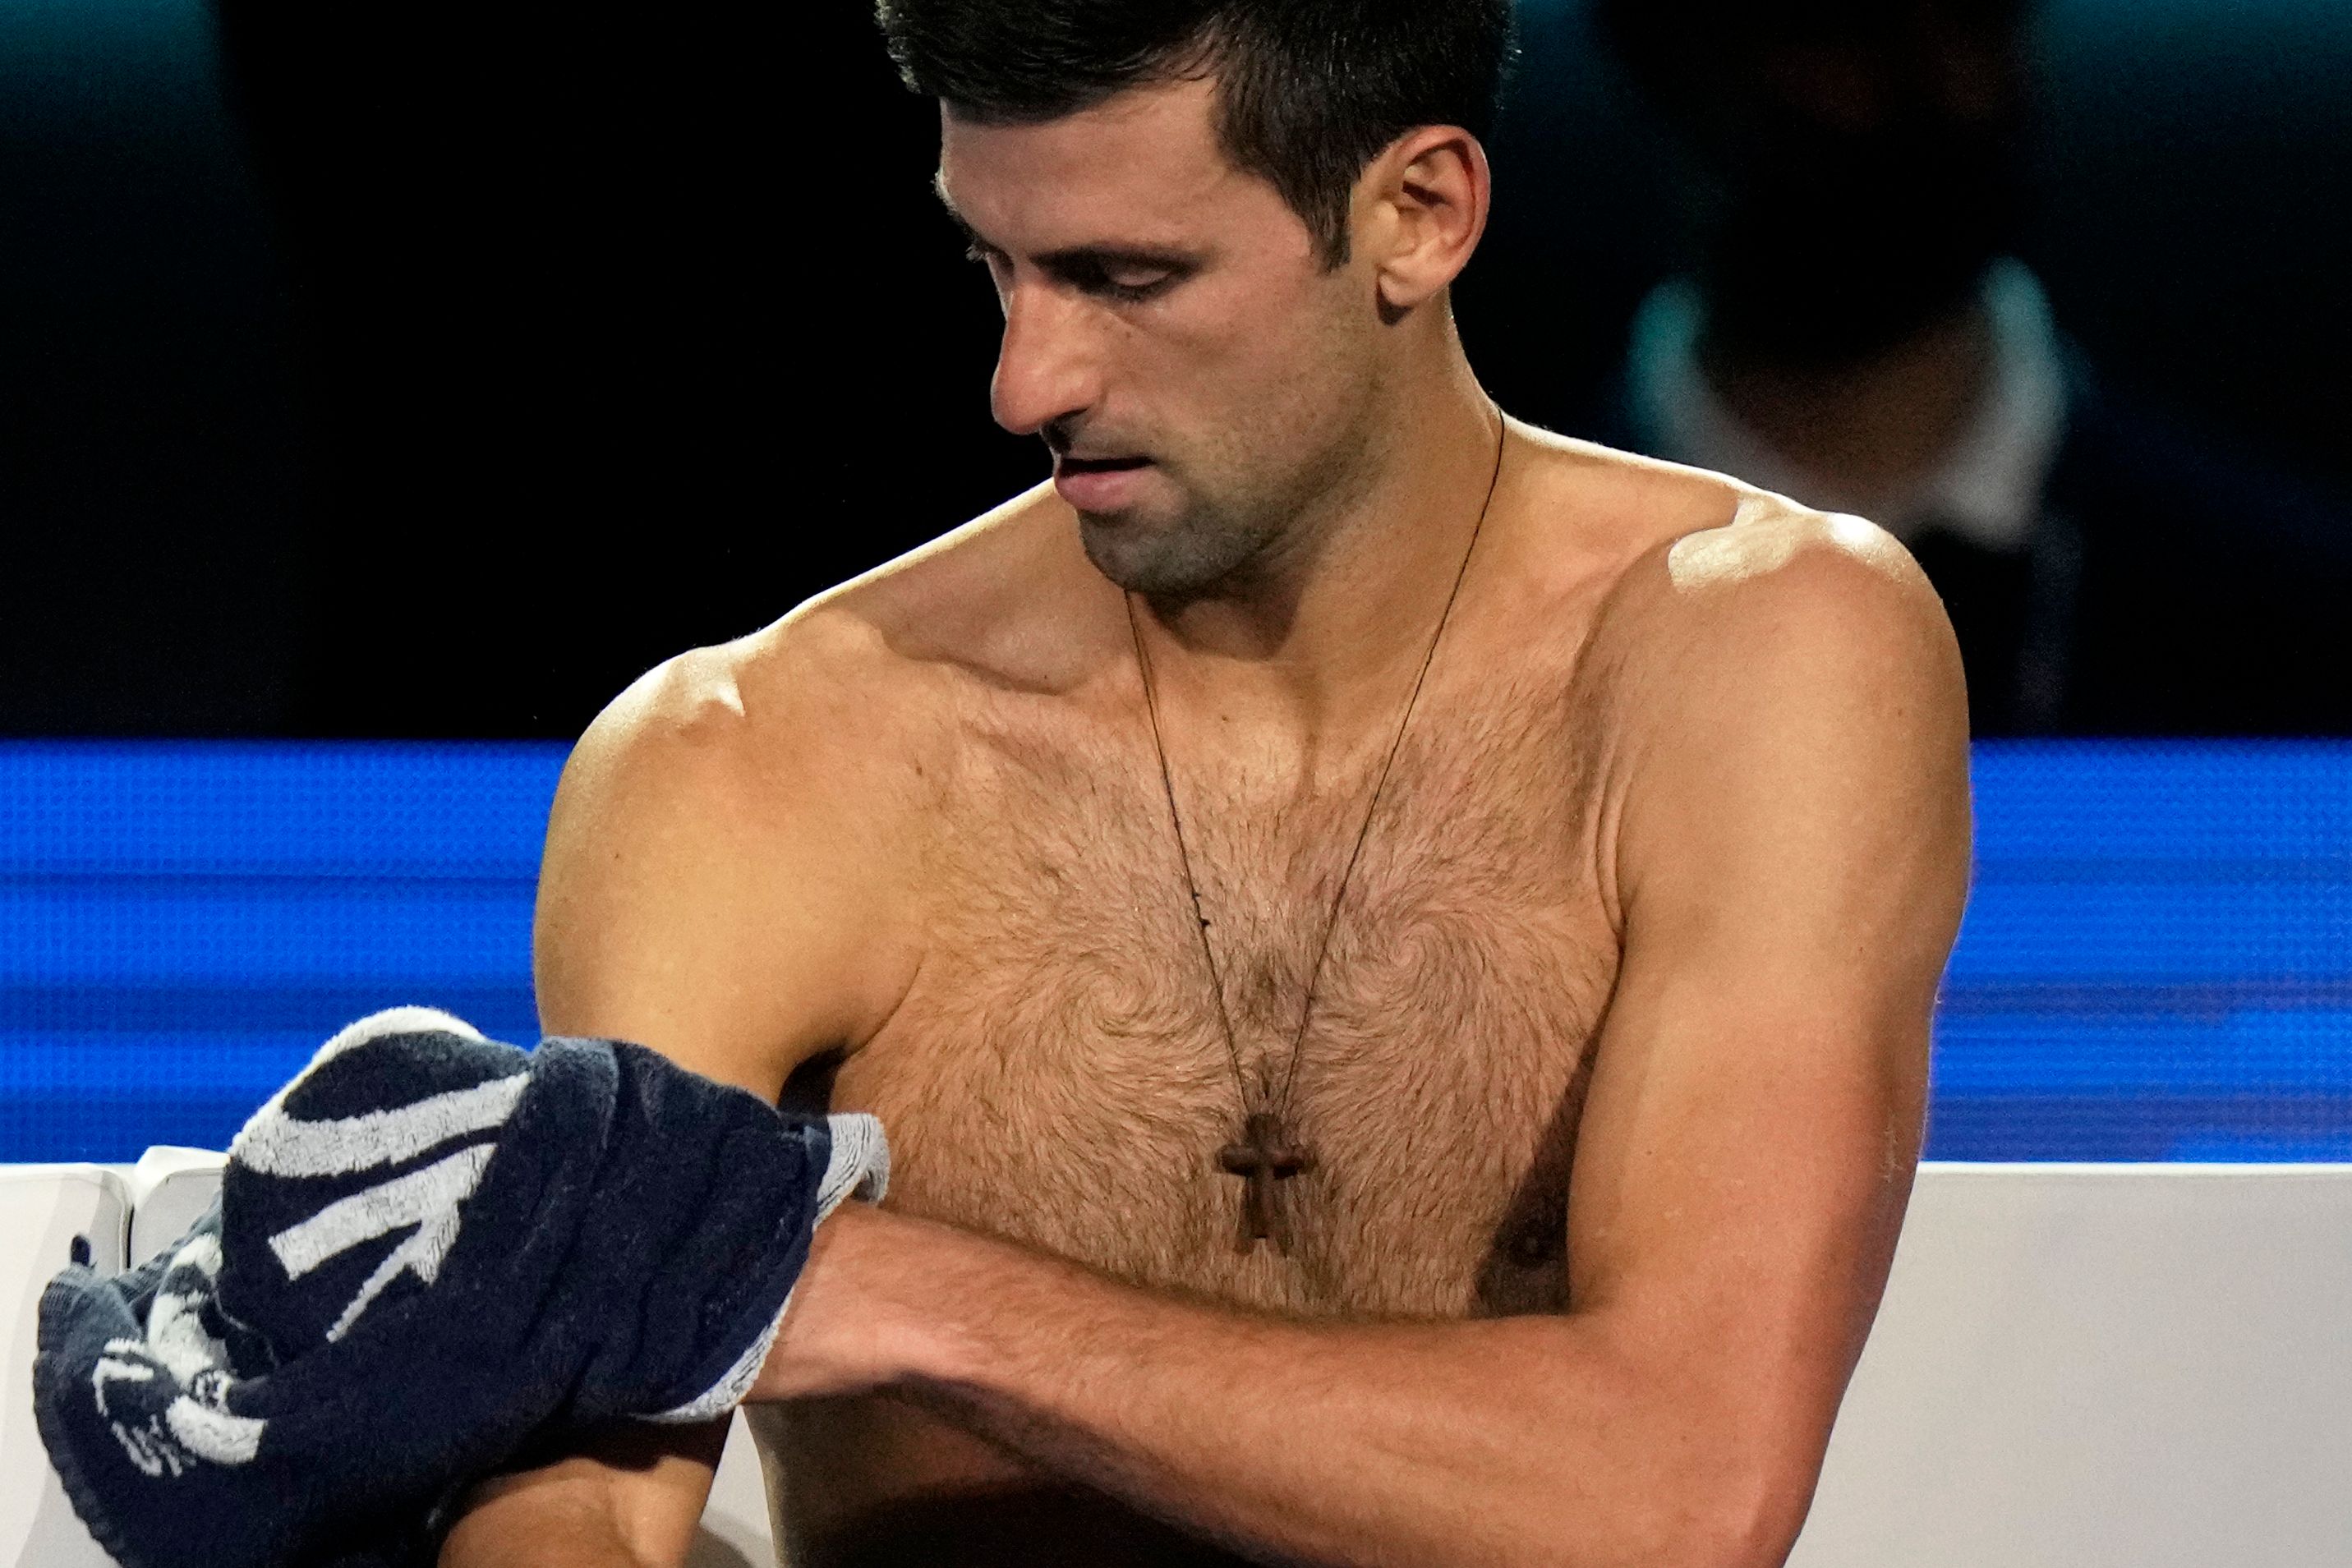 Novak takes shirt off during match break with Millman - ESPN Video